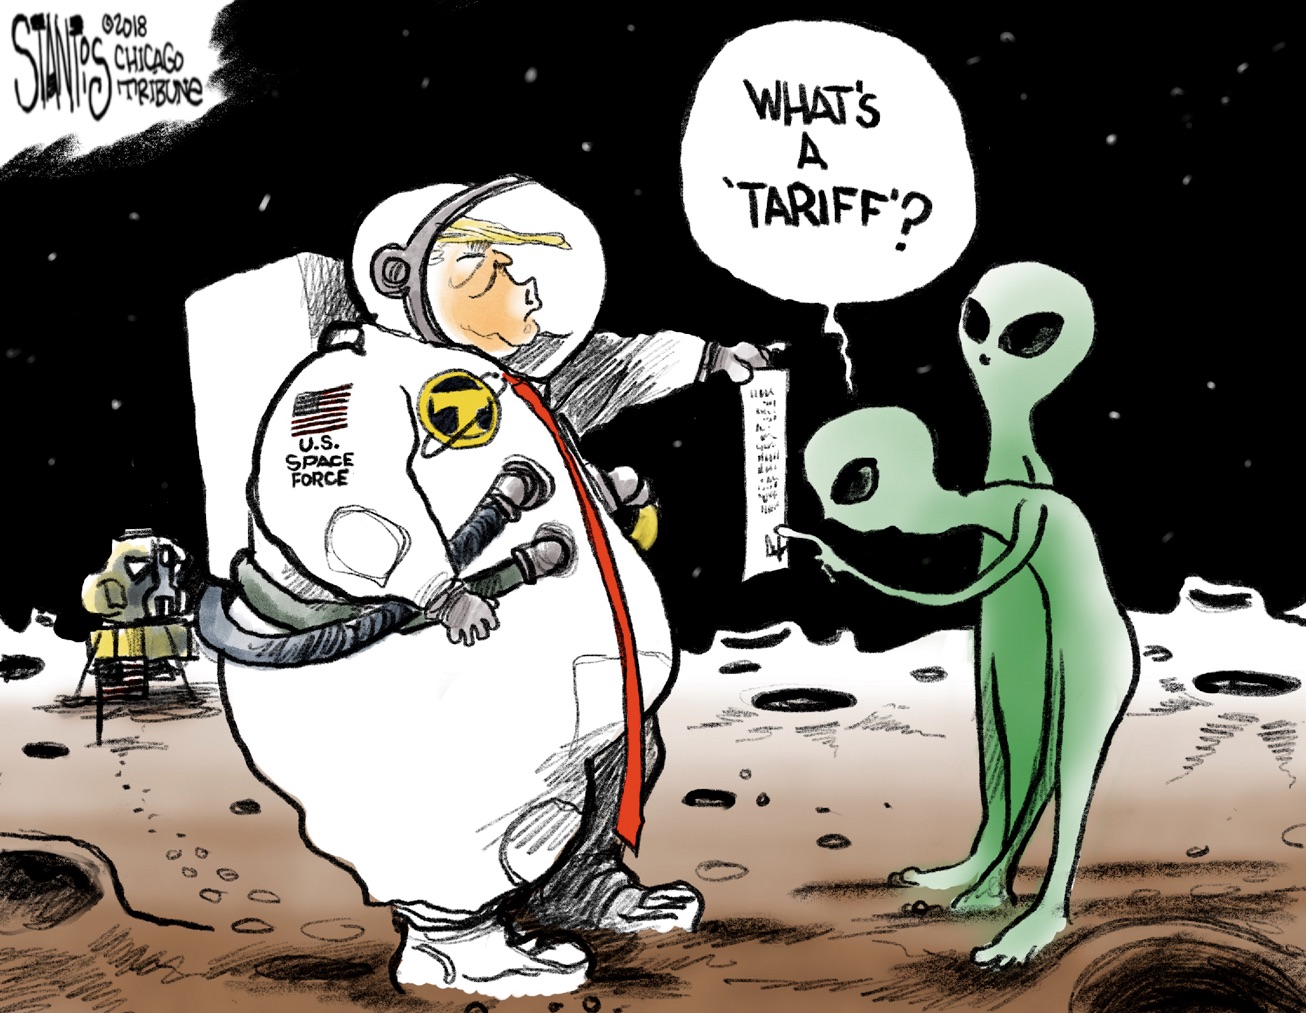 Political cartoon . Trump space force aliens tariffs